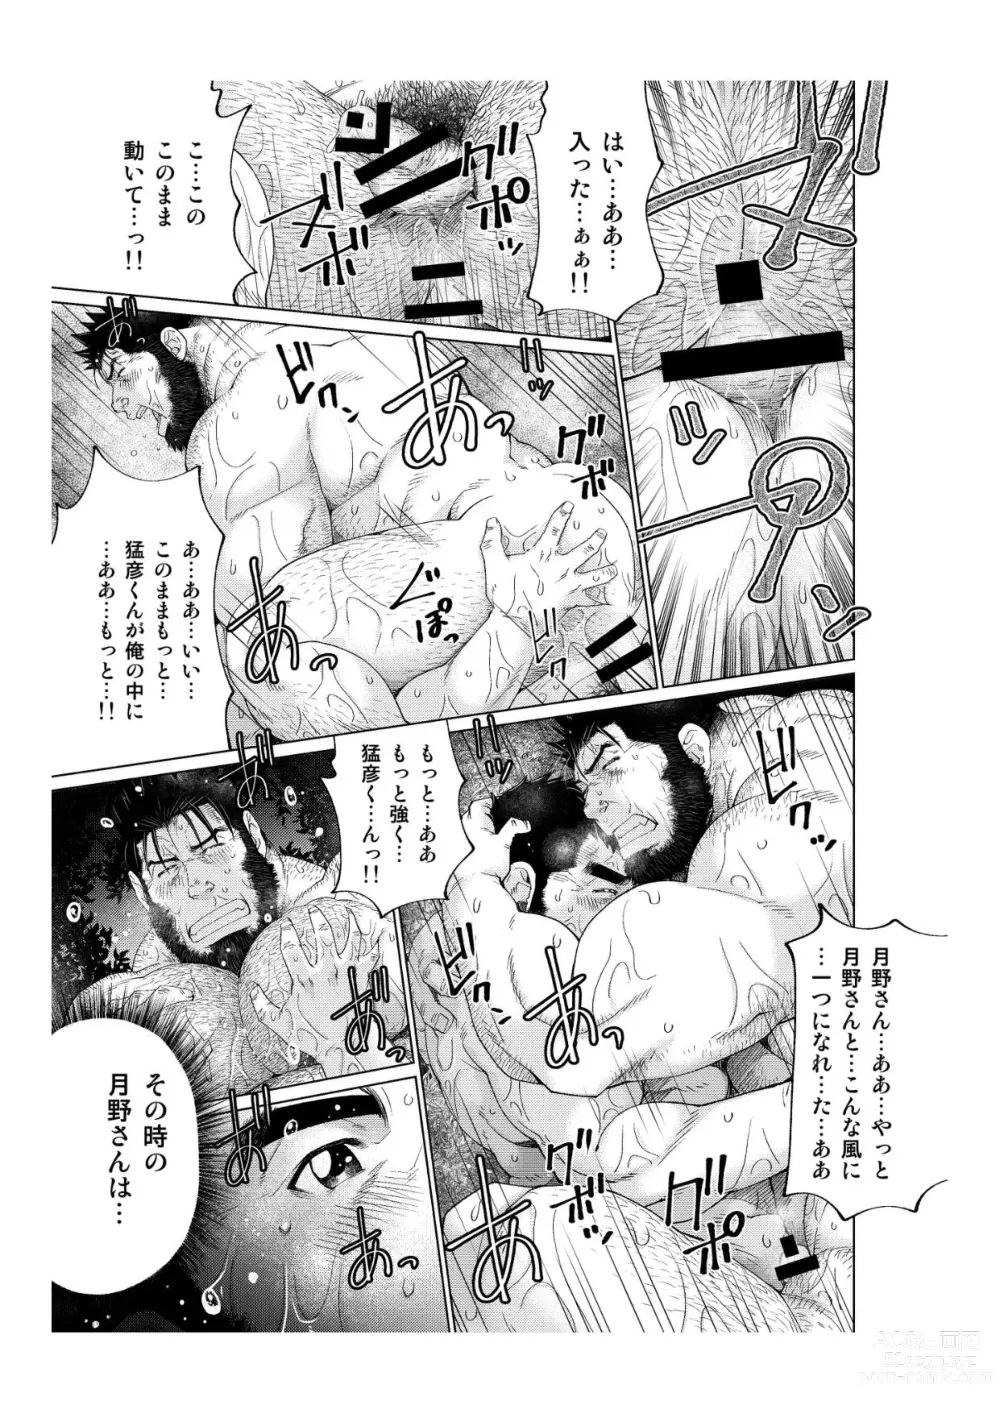 Page 42 of doujinshi Tsukinowaguma